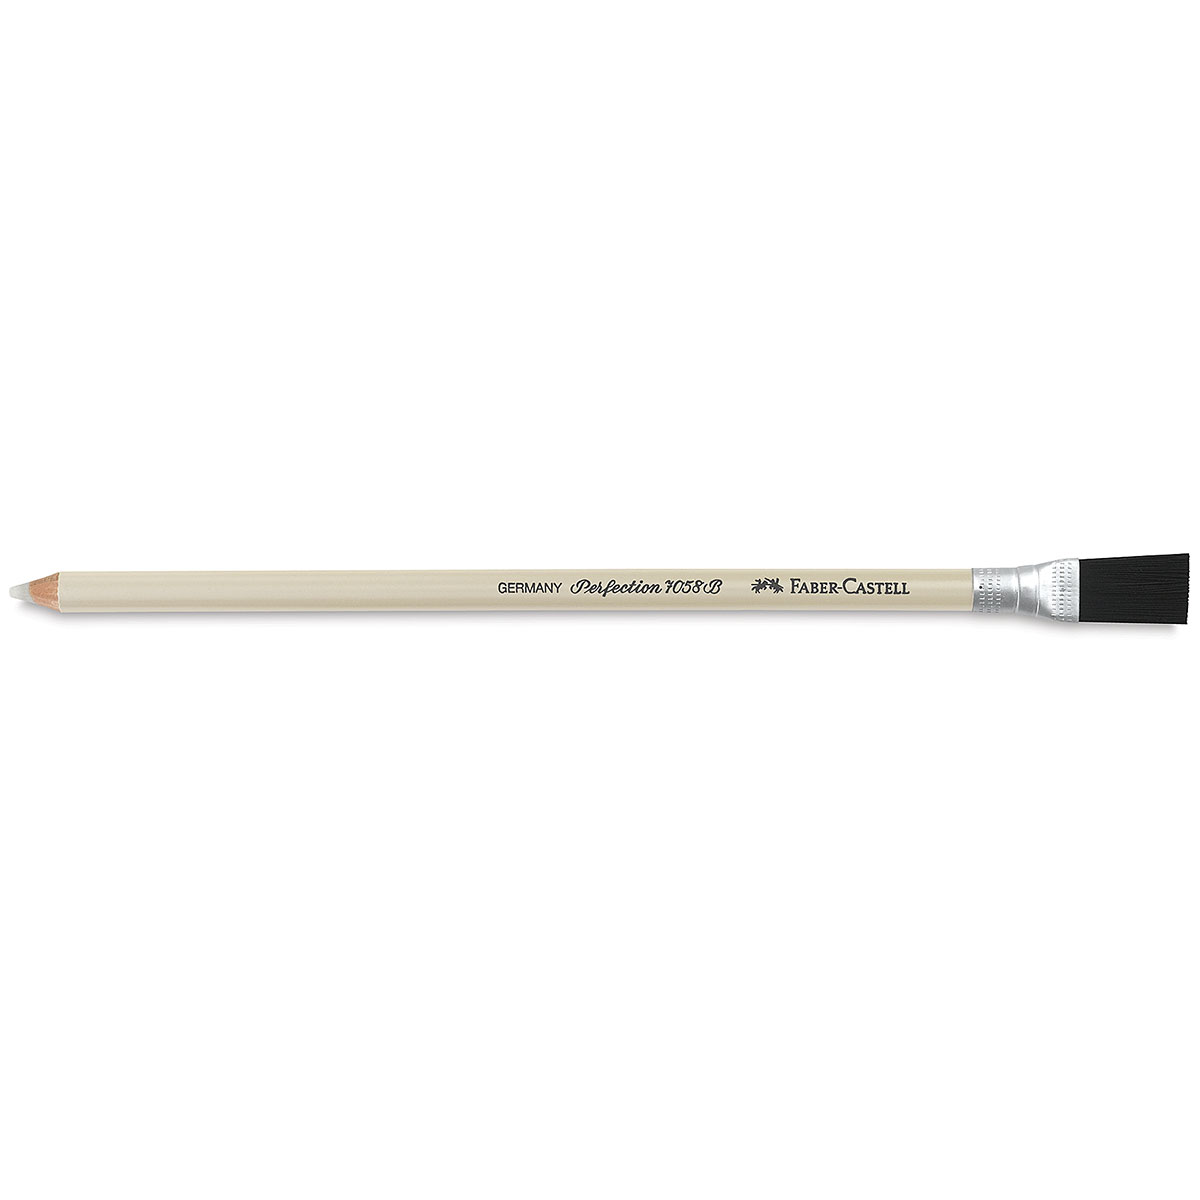 Faber Castell Perfection Eraser - Artists Precision Eraser Pencil